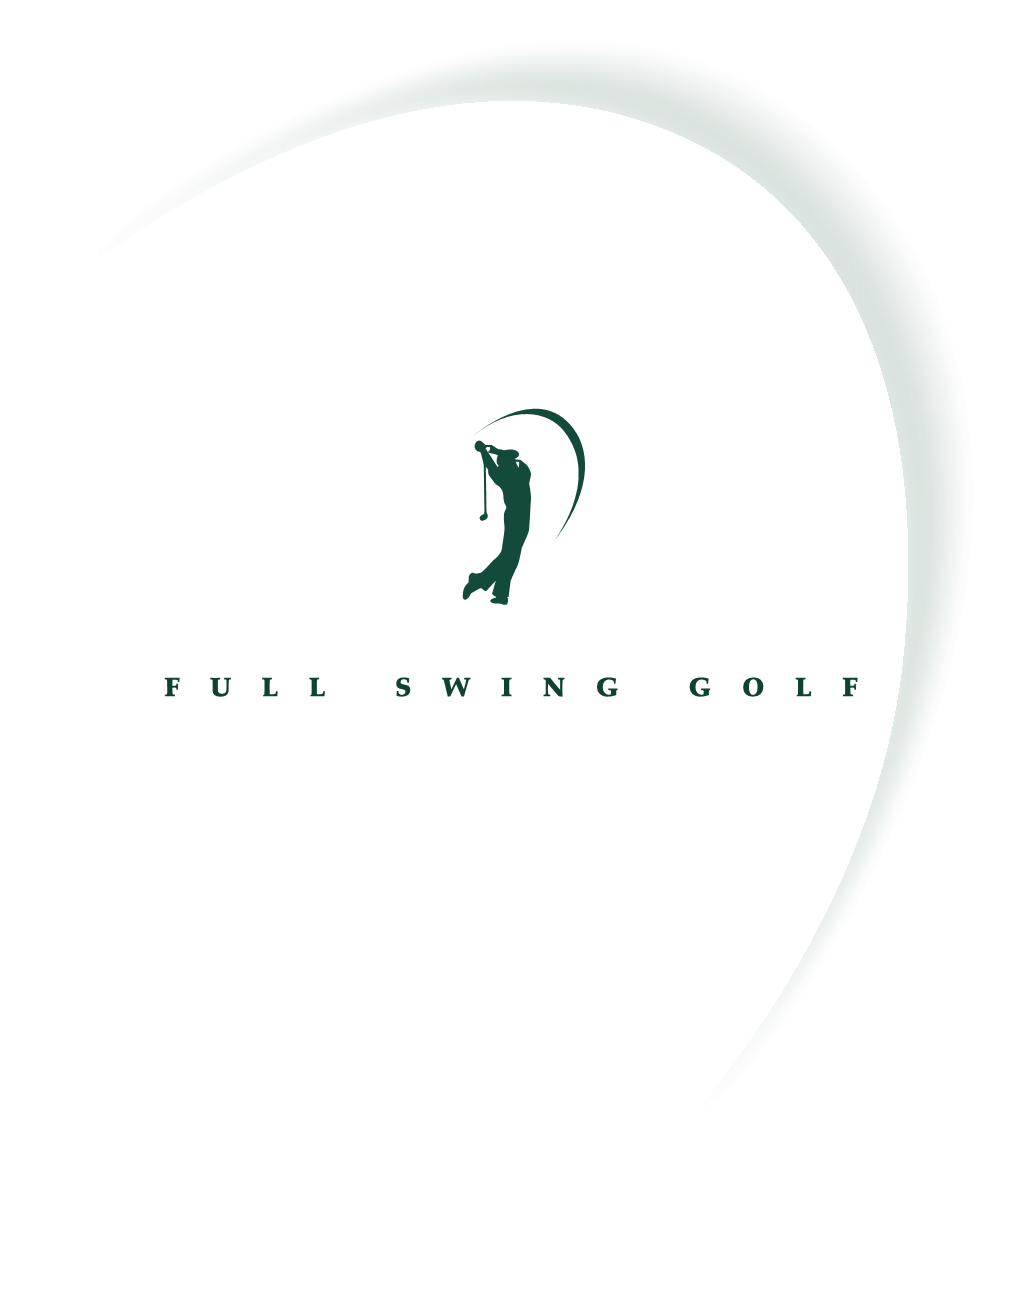 Full Swing Golf Contents